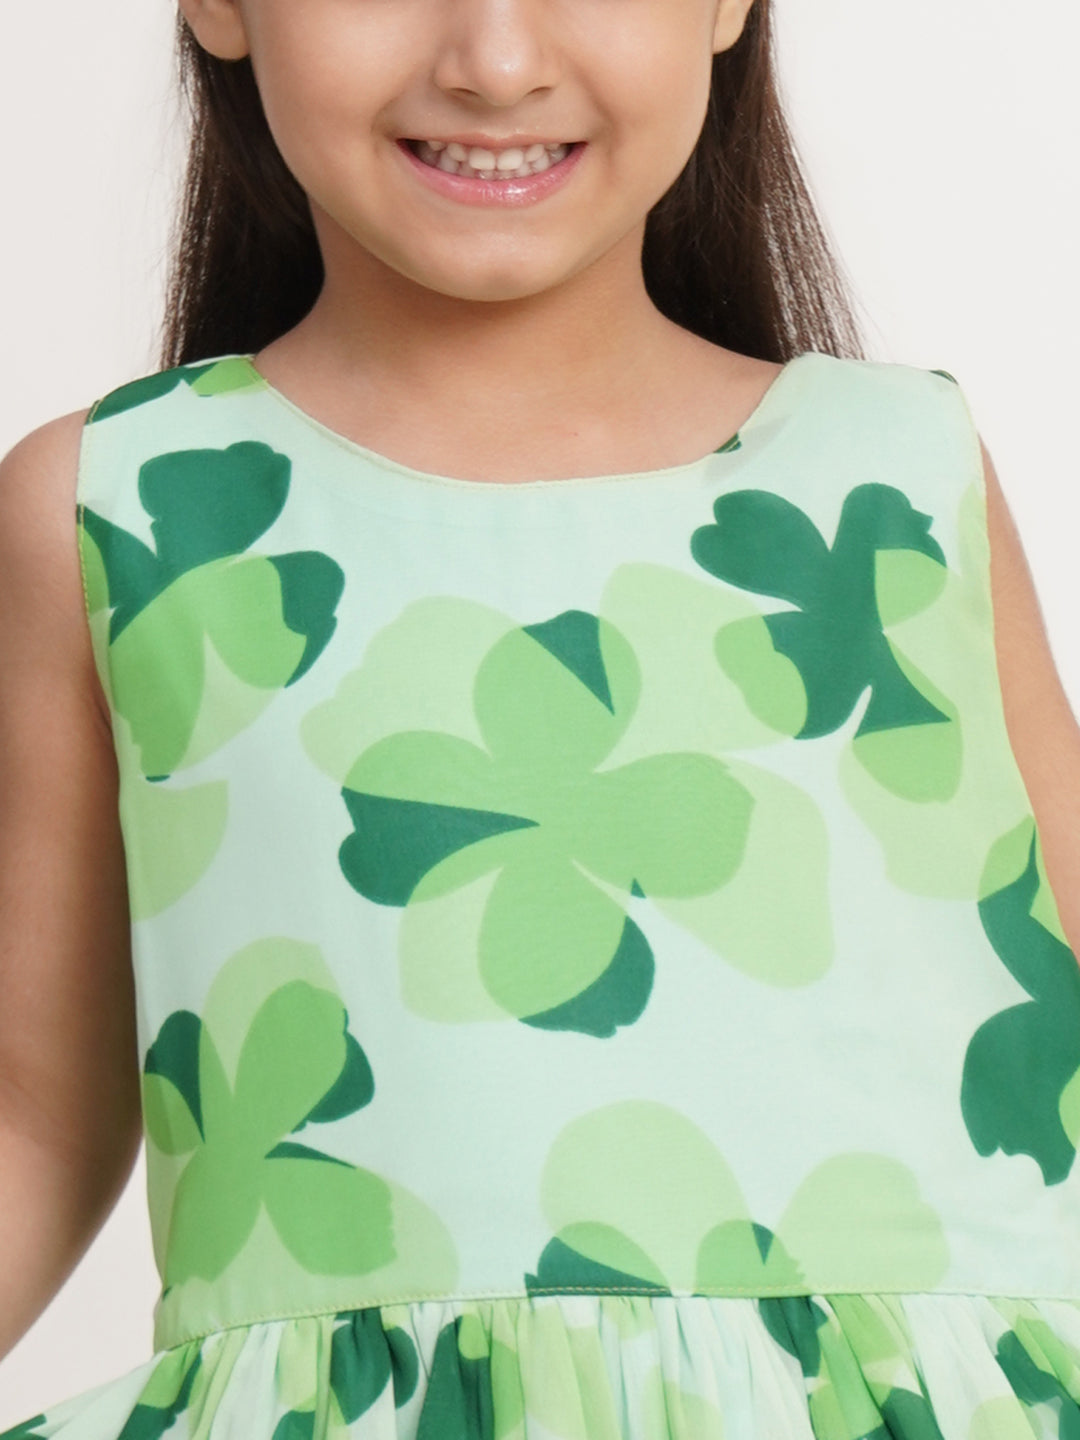 CREATIVE KID'S Girl Green Floral Print A-Line Dress